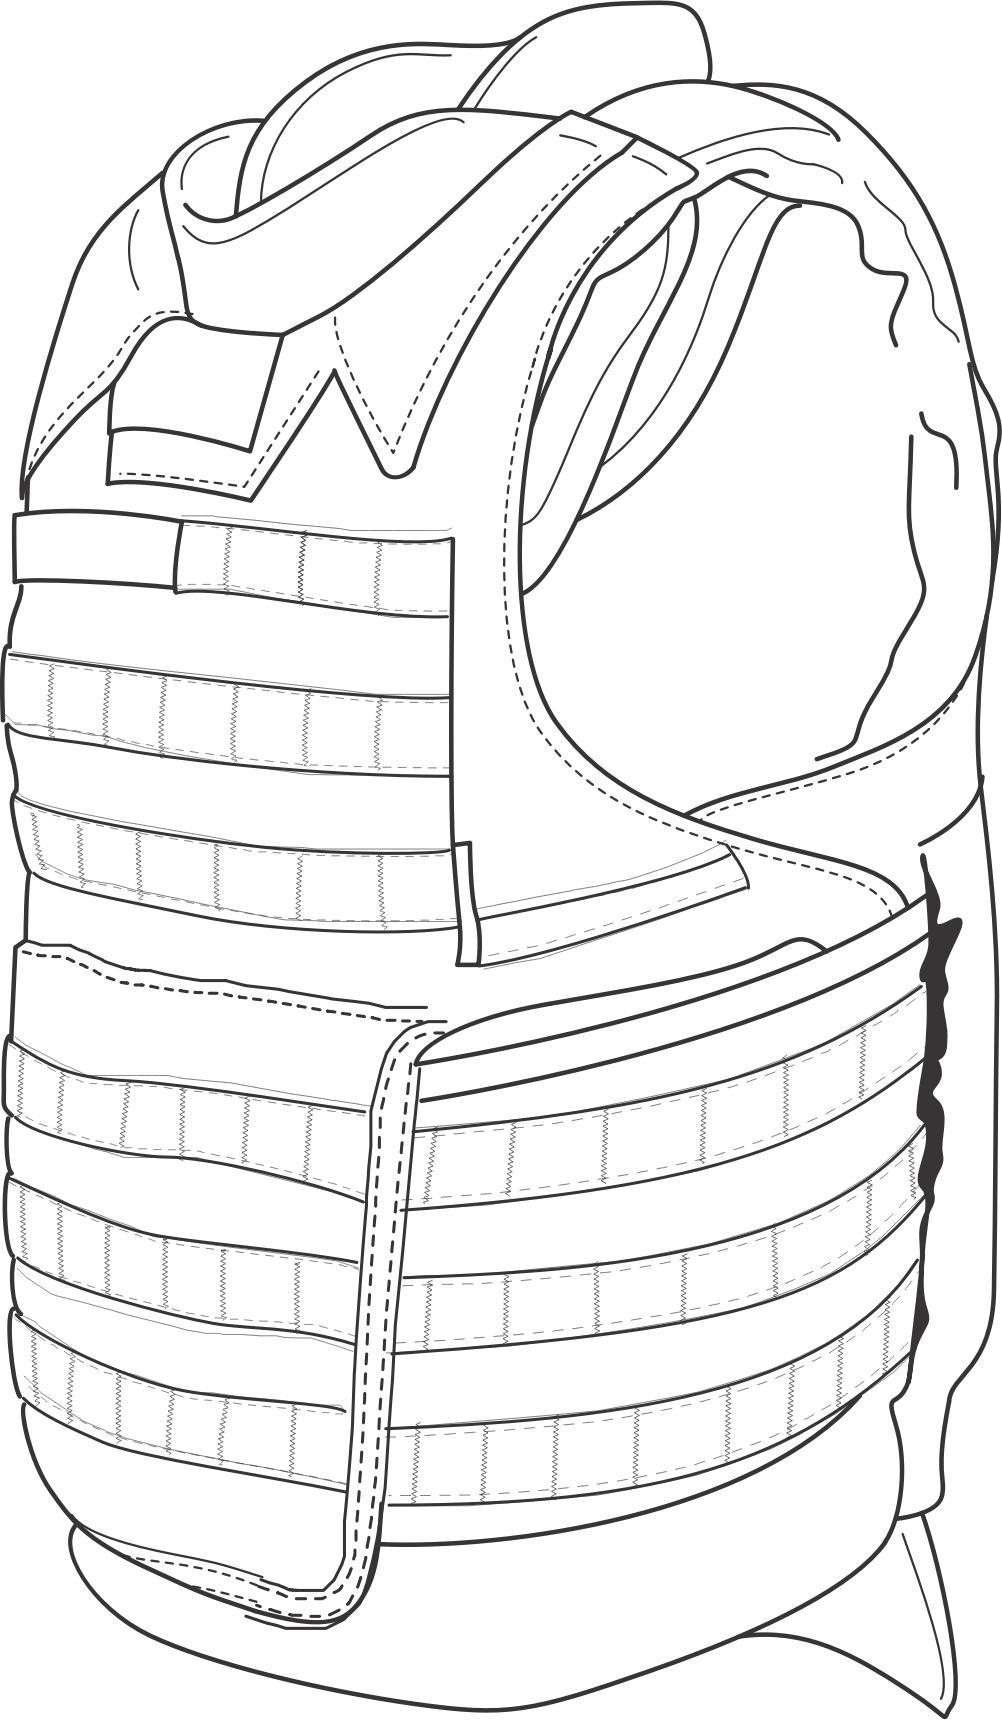 Military Armor Vest png transparent